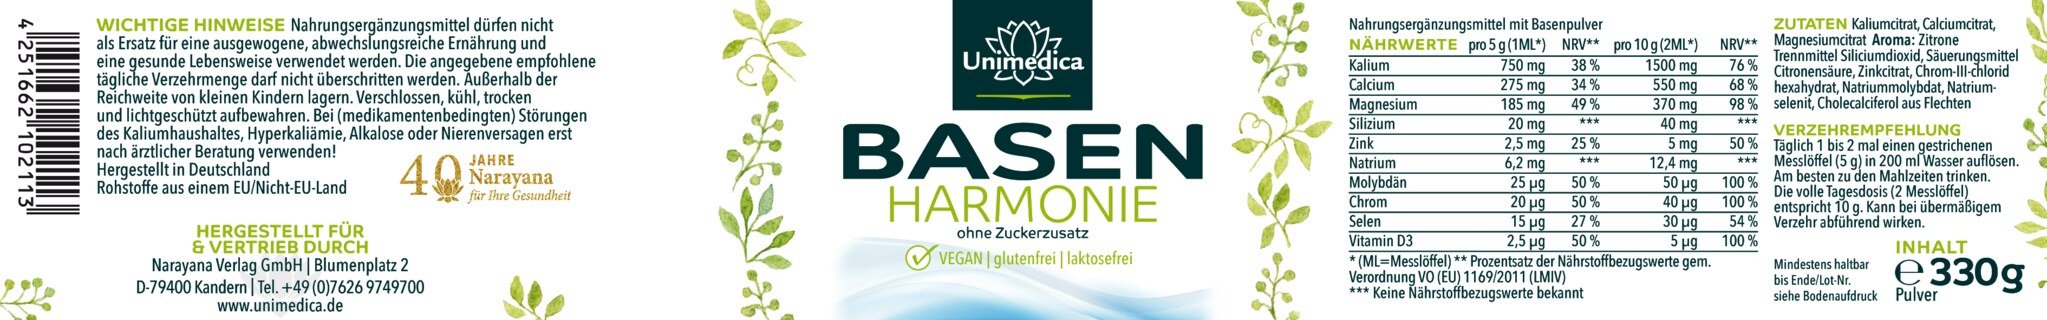 Bases Harmony - 330g - from Unimedica